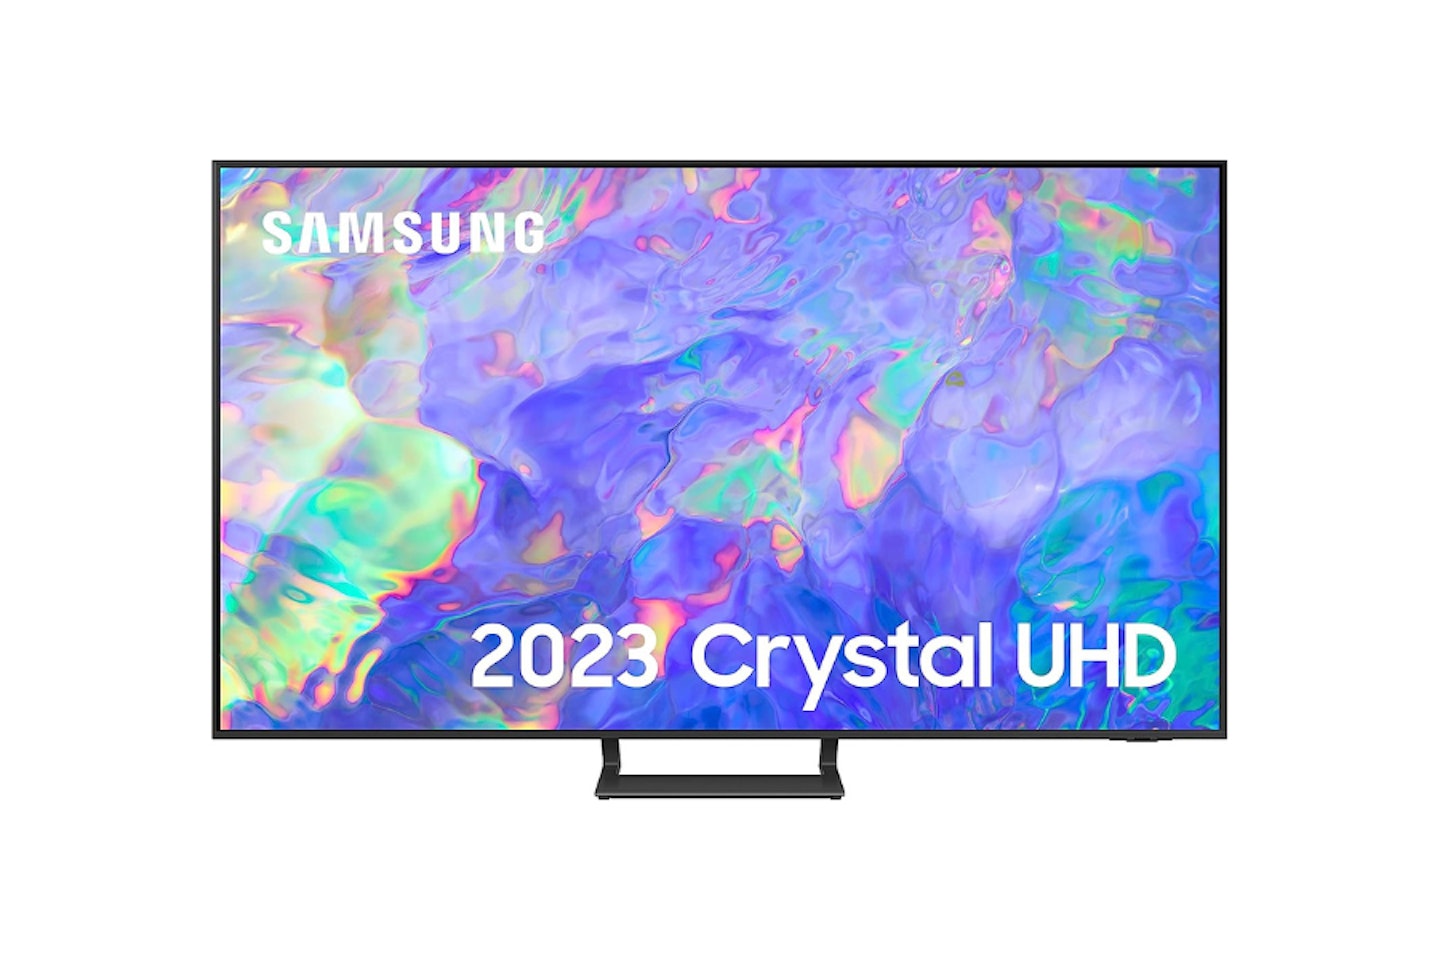 Samsung CU8500 55-inch TV